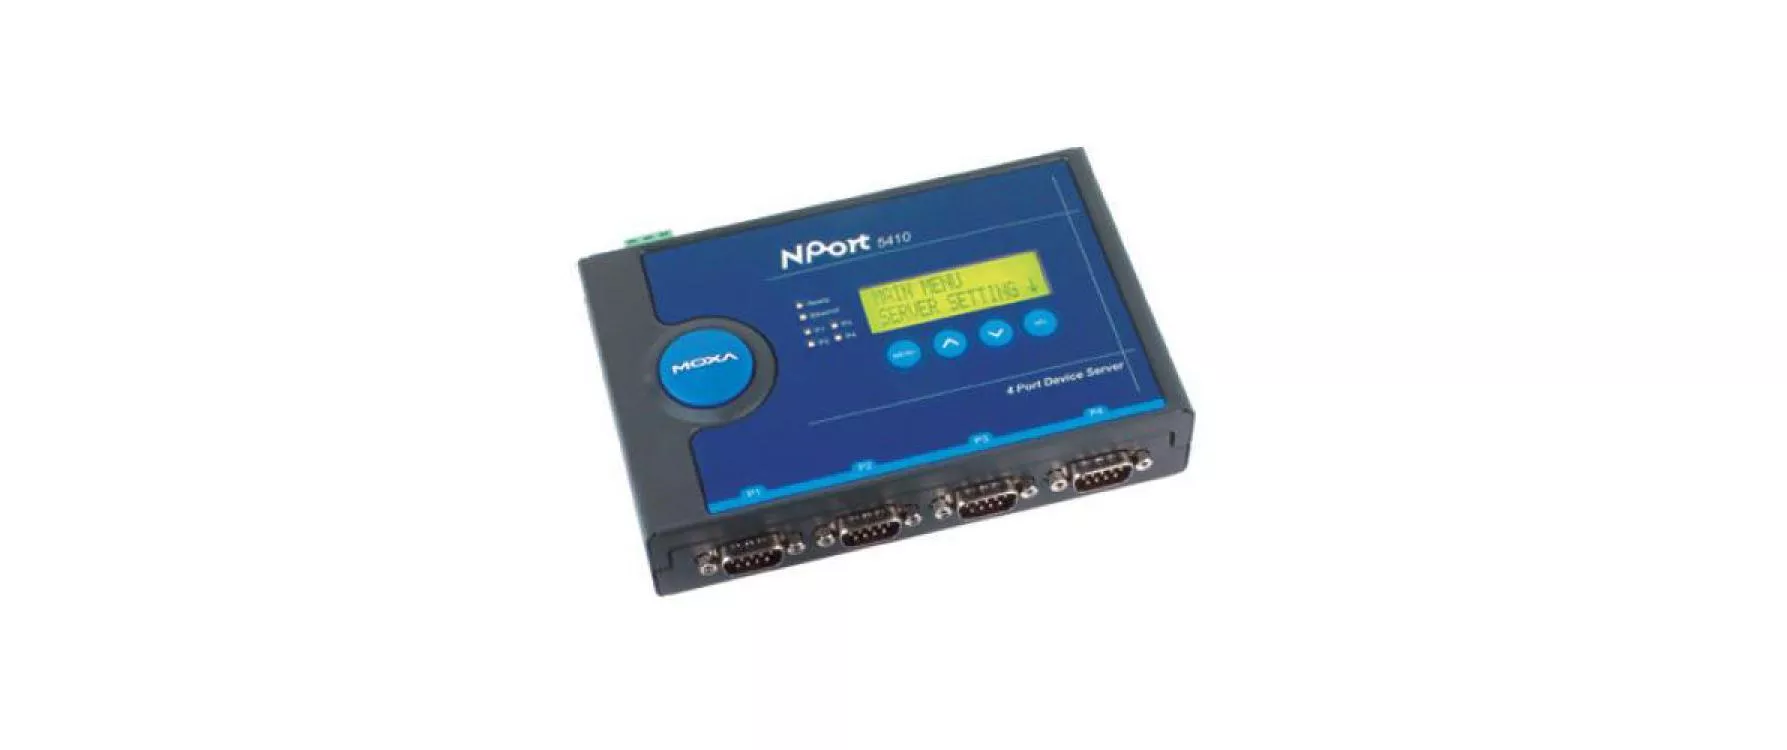 Serial Device Server NPort 5450